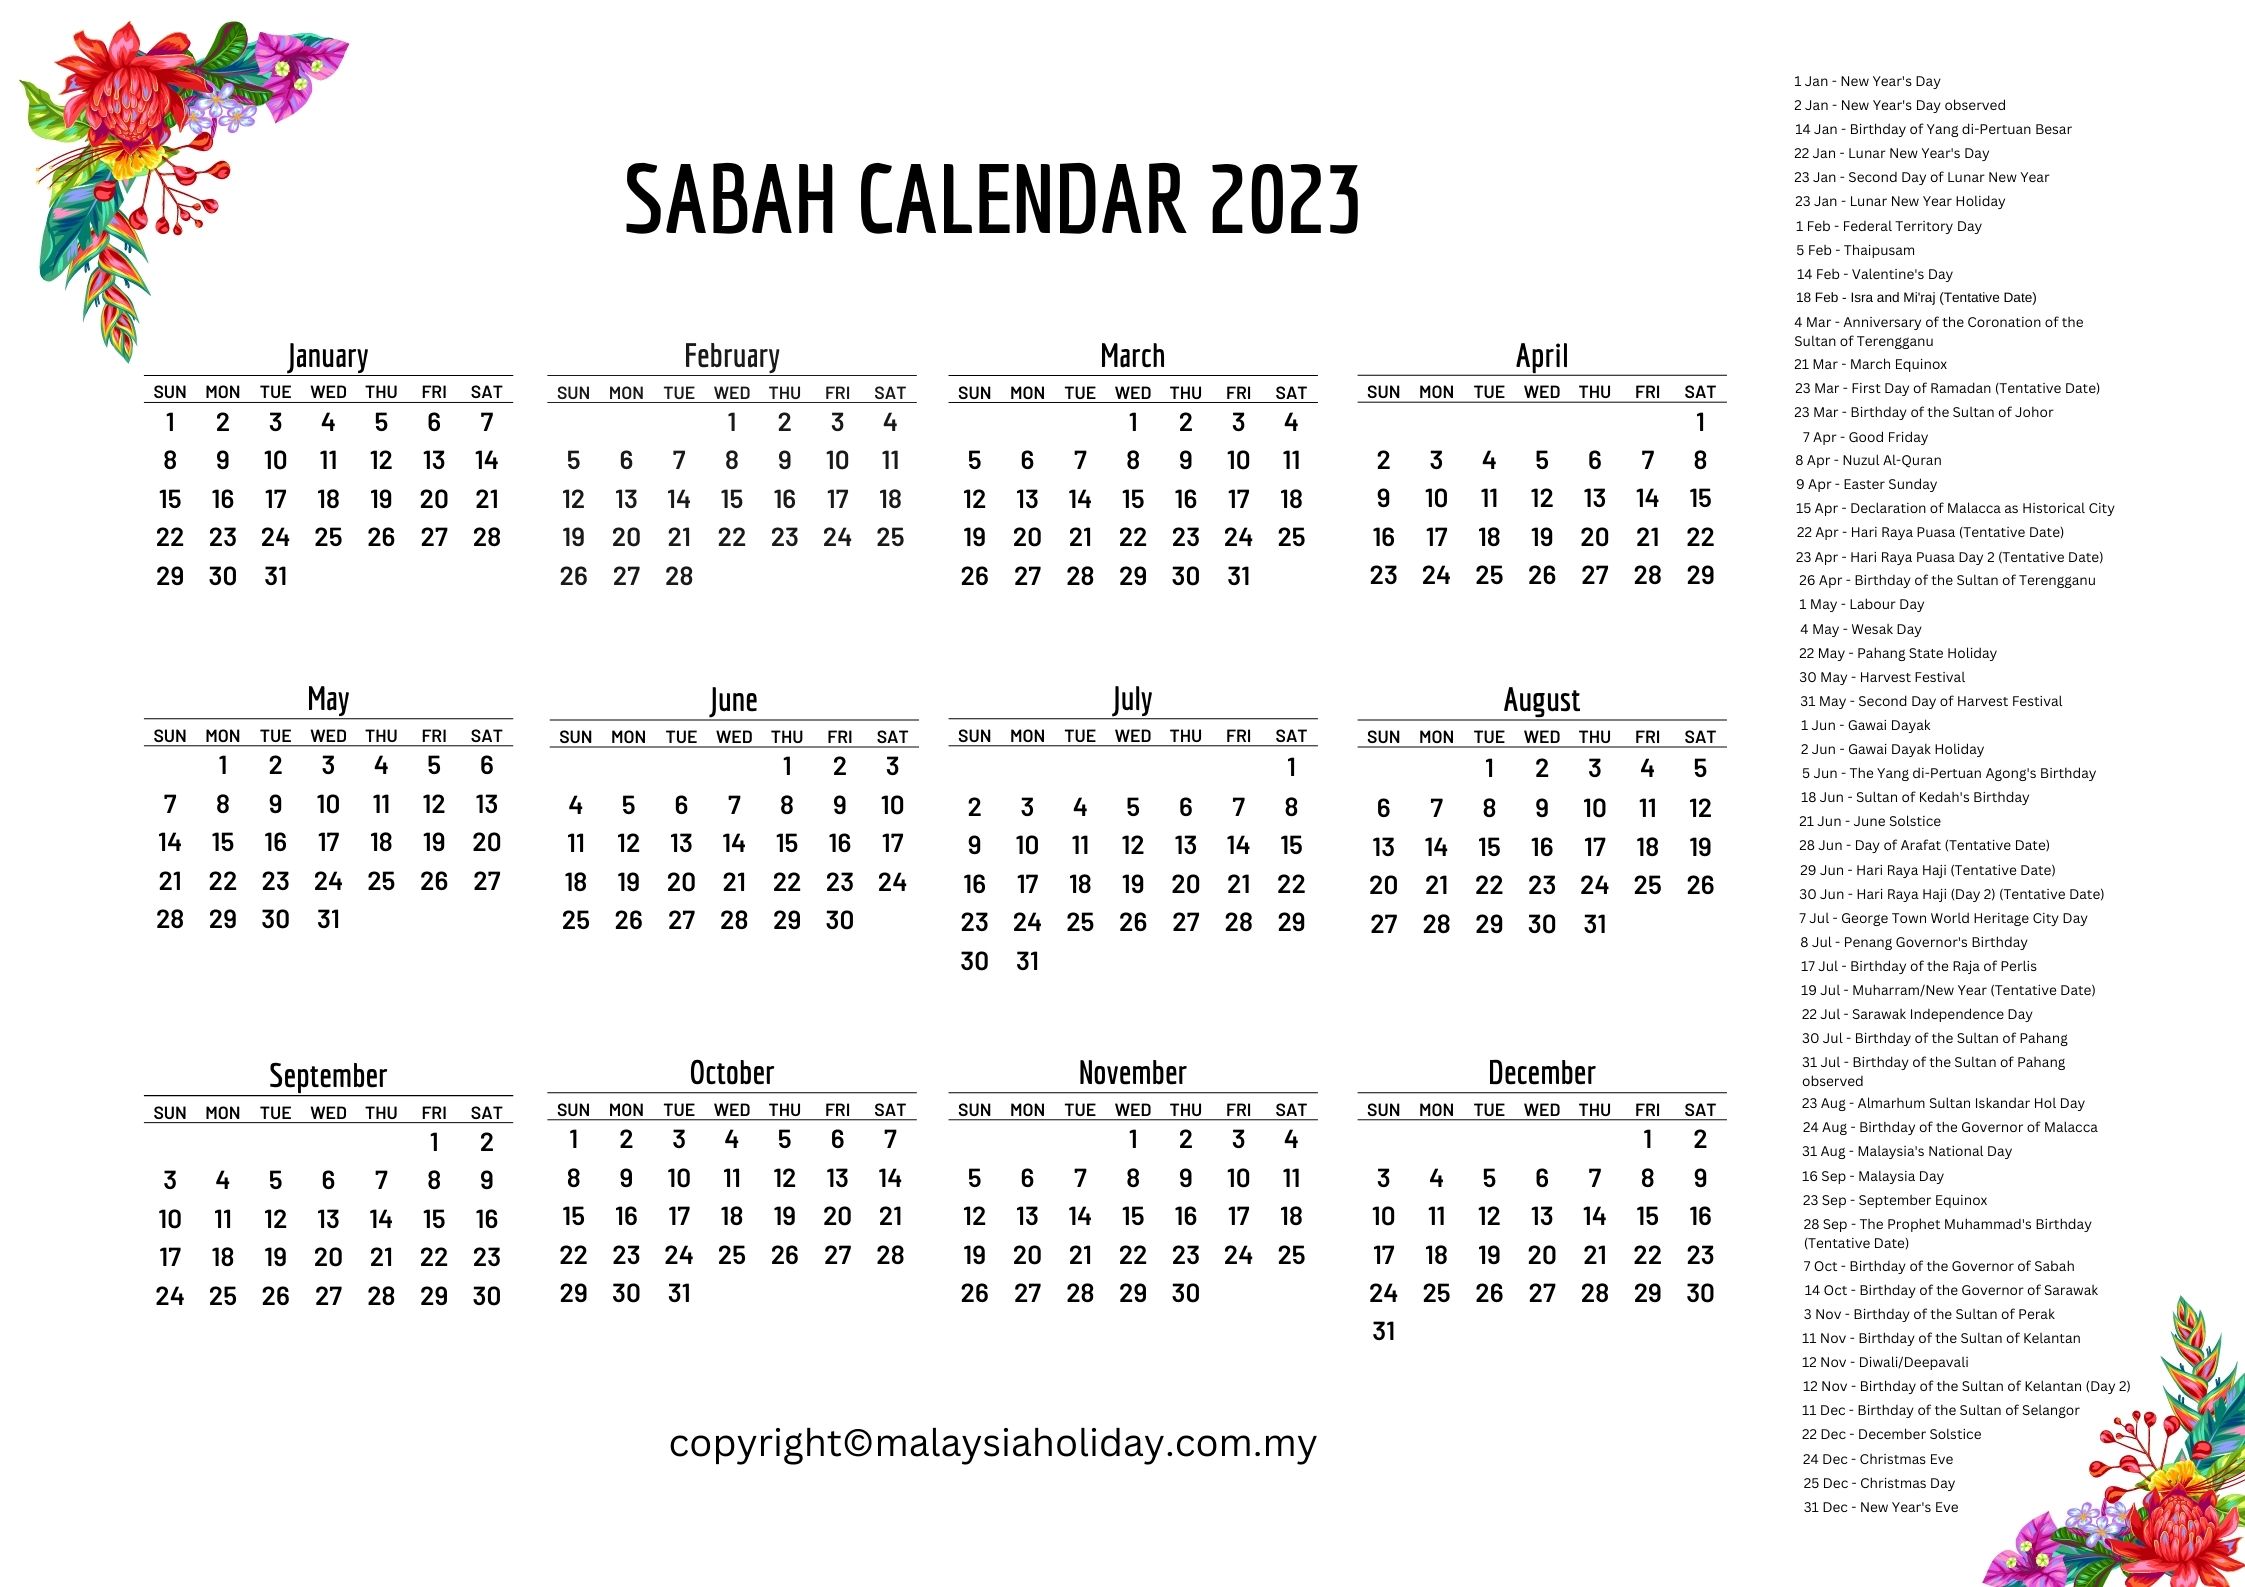 Sabah Public Holidays 2023